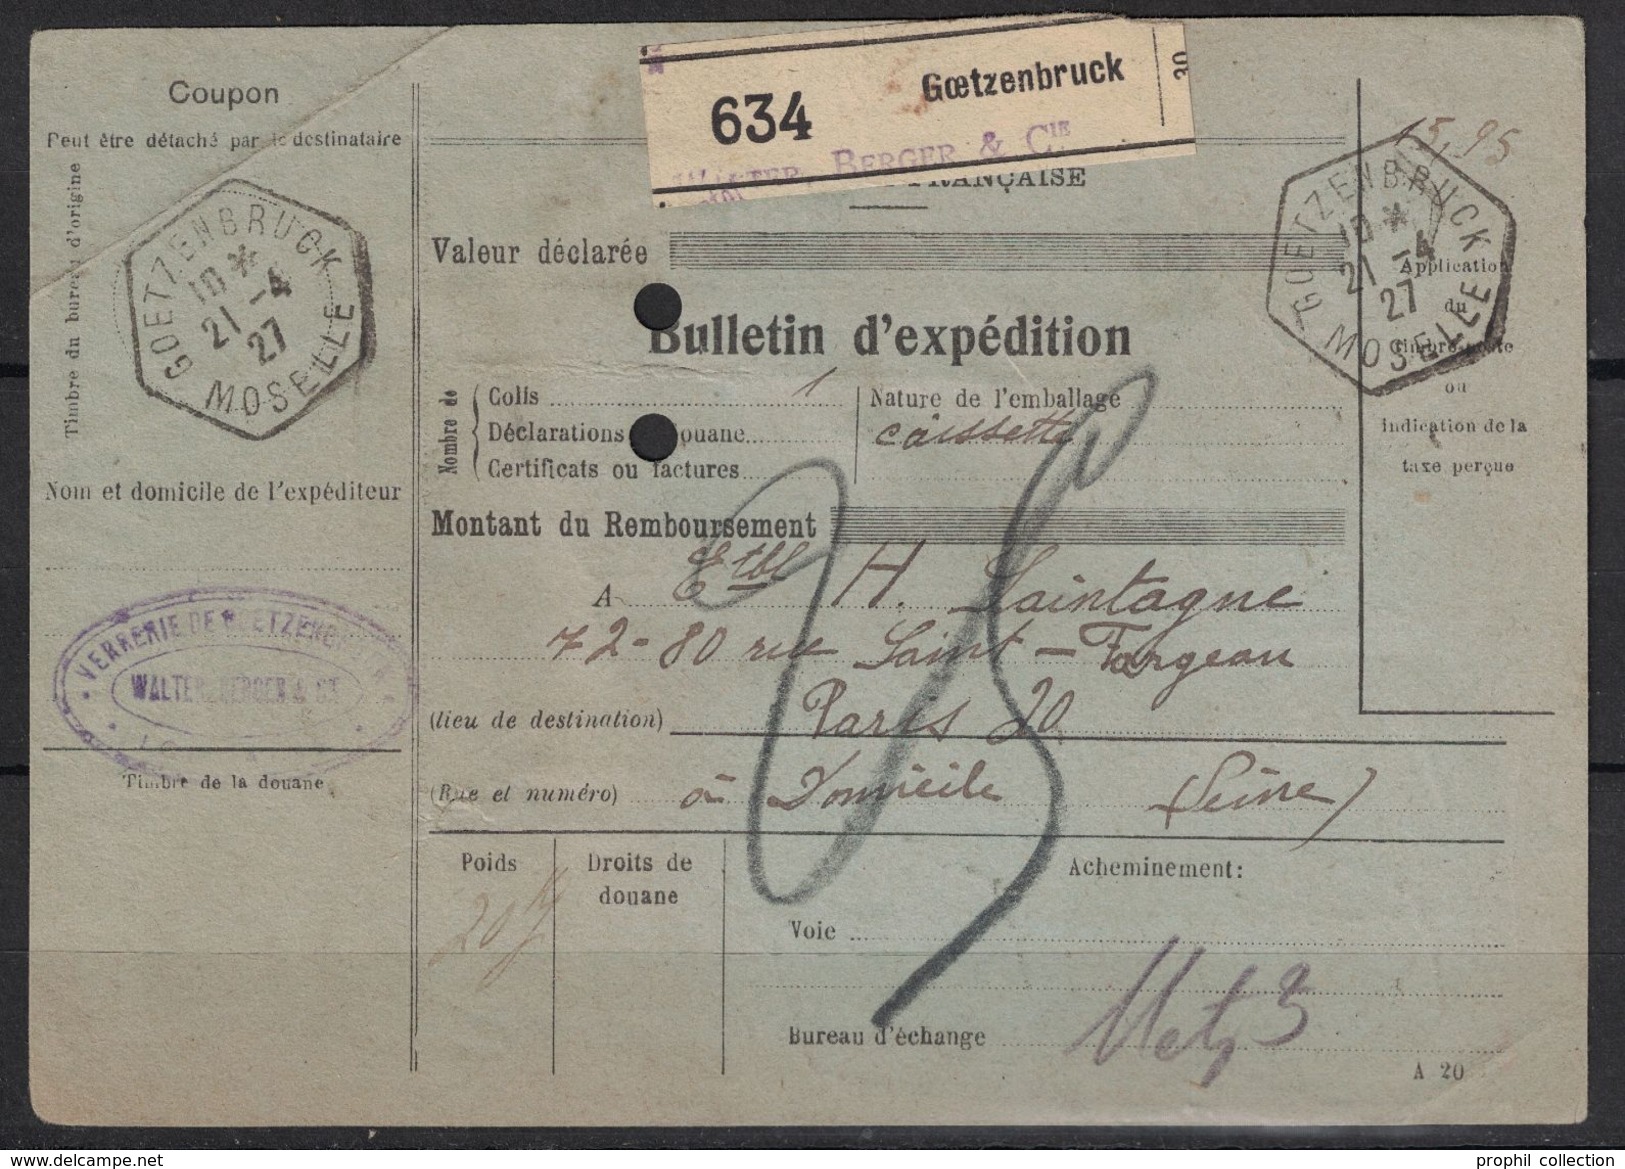 1927 COLIS POSTAUX BULLETIN EXPEDITION Alsace Lorraine GOETZENBRUCK MOSELLE FISCAL MERSON PAGNY CHEMIN FER EST AMBULANT - Covers & Documents